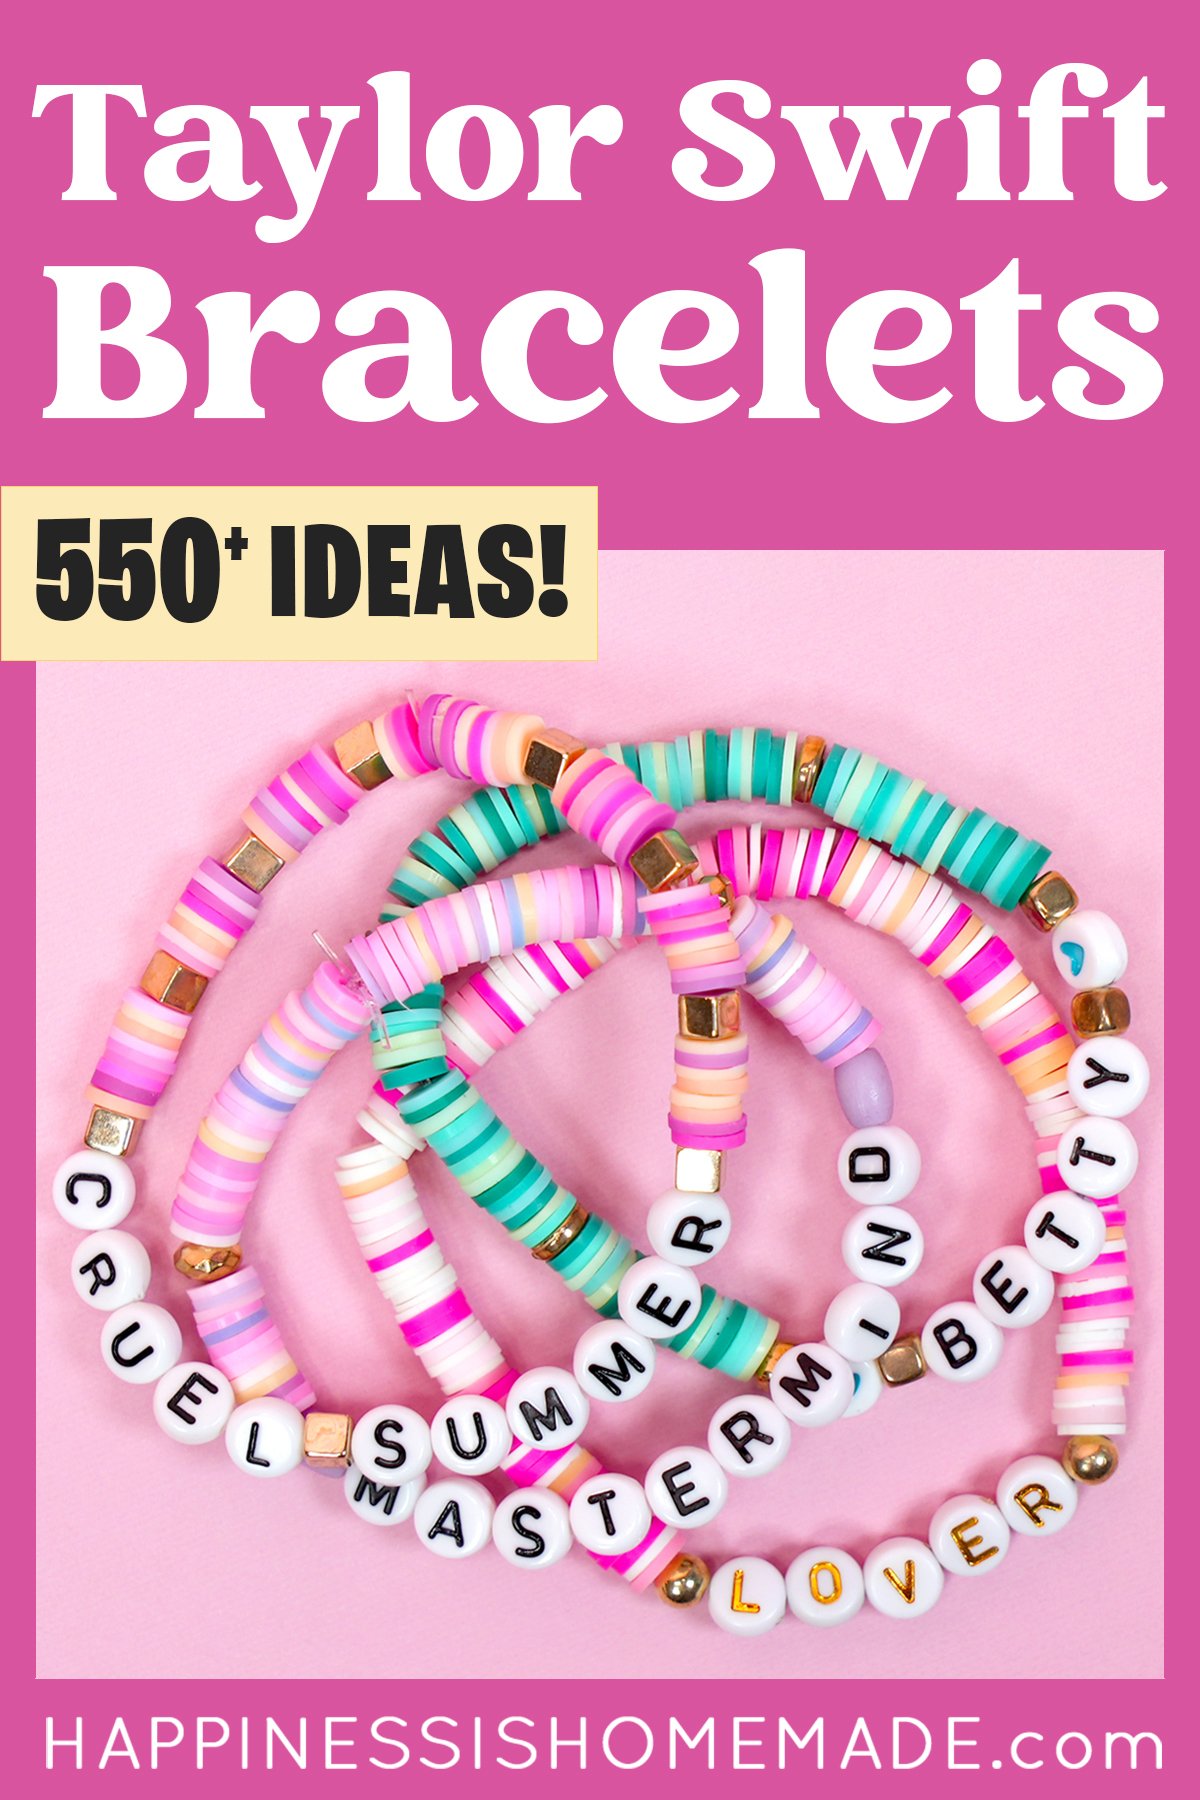 Pinterest graphic: "Taylor Swift Bracelets: 550+ Bracelet Ideas" with bracelet examples